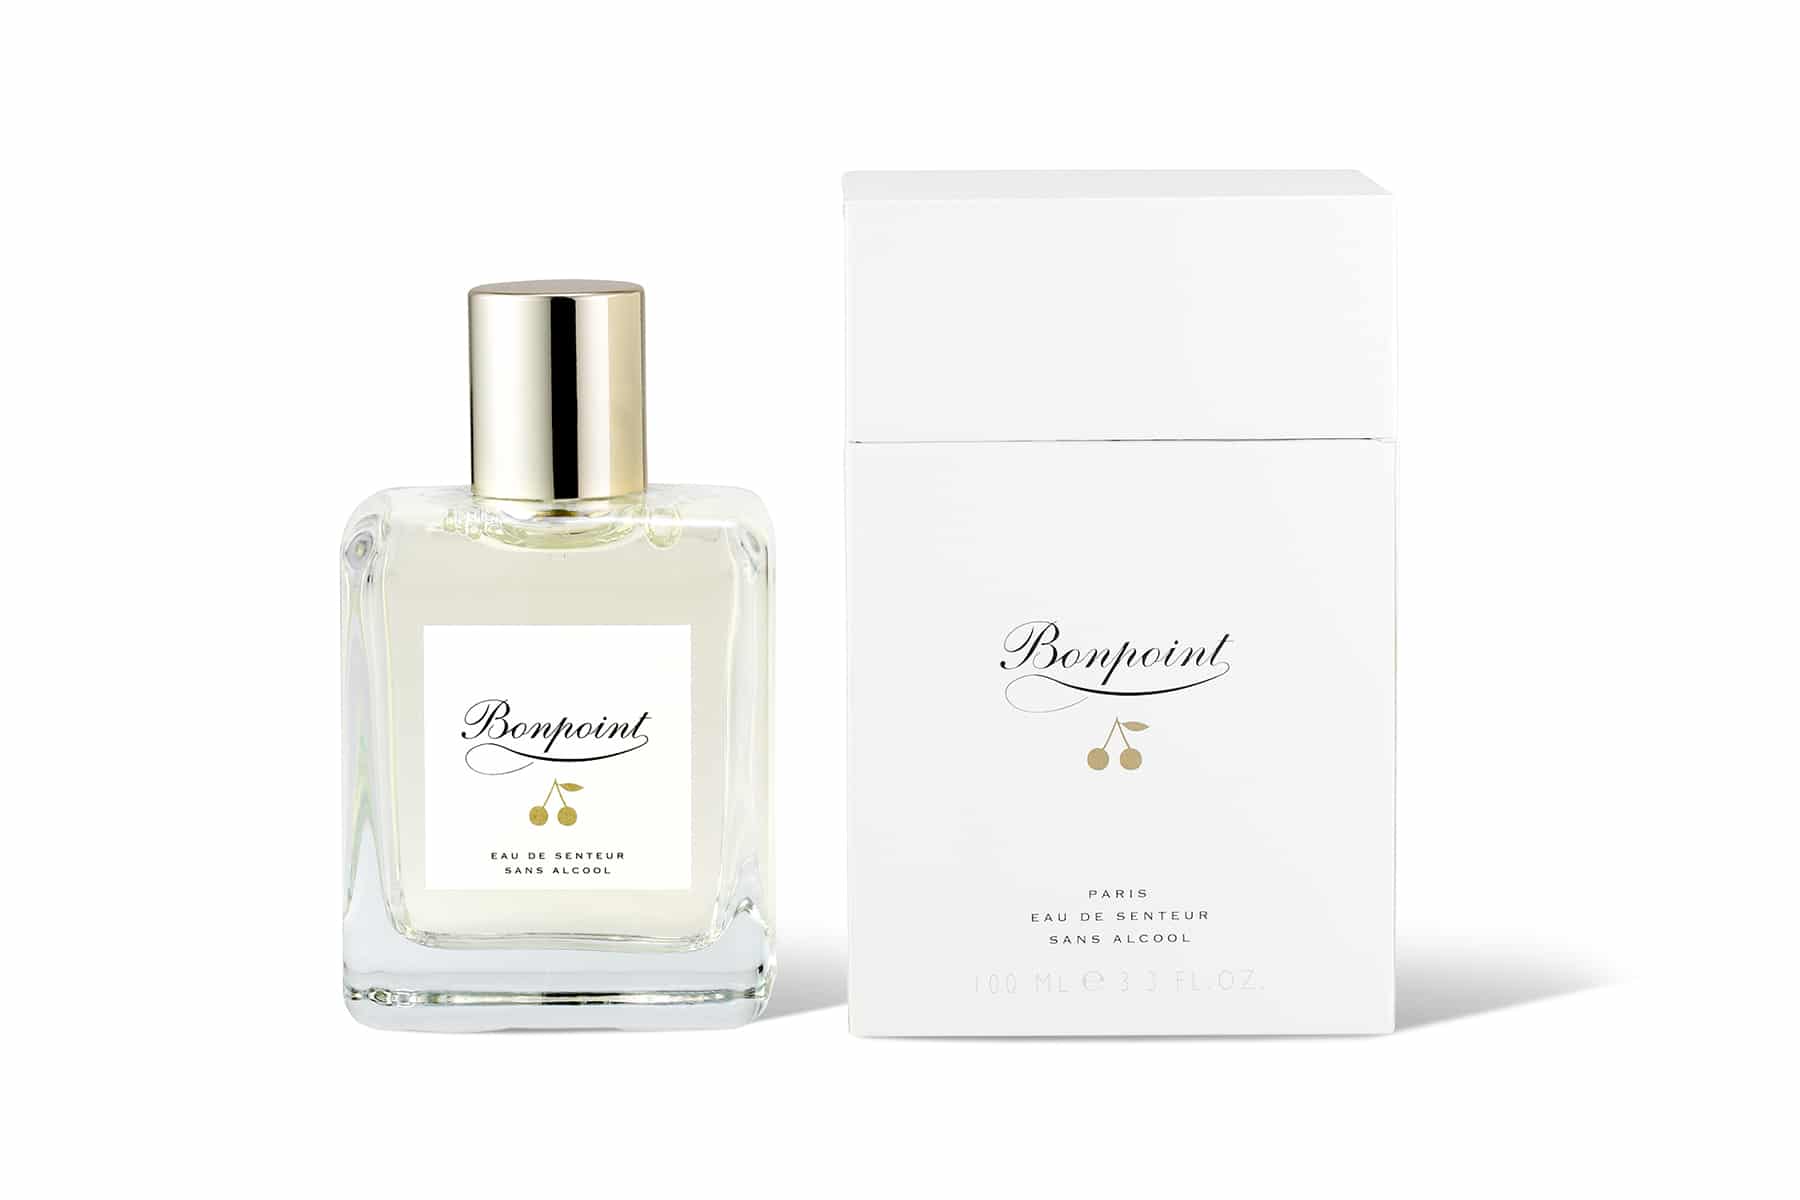 Packshot Parfum : Bonpoint, boite et flacon